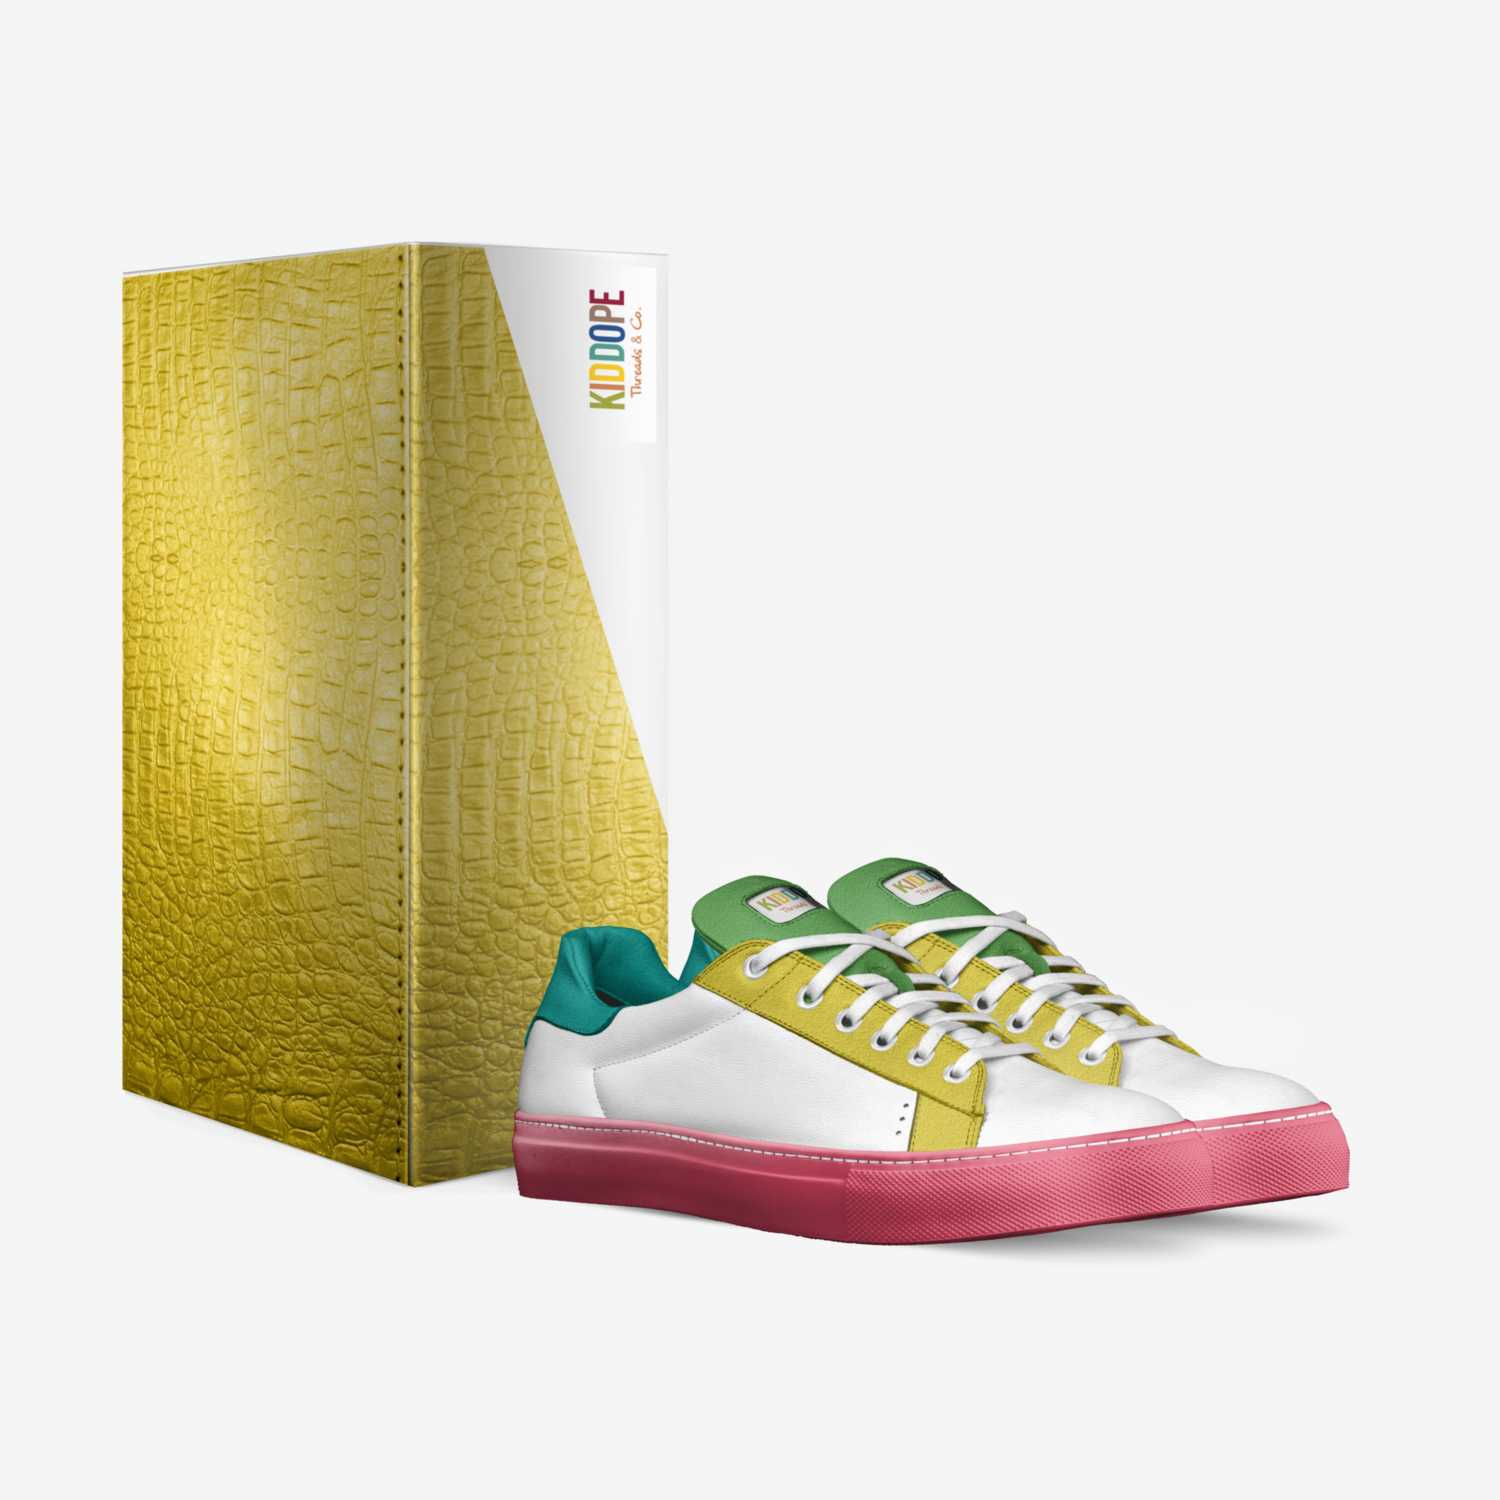 KIDDBLEU custom made in Italy shoes by Kuriyan Allen | Box view